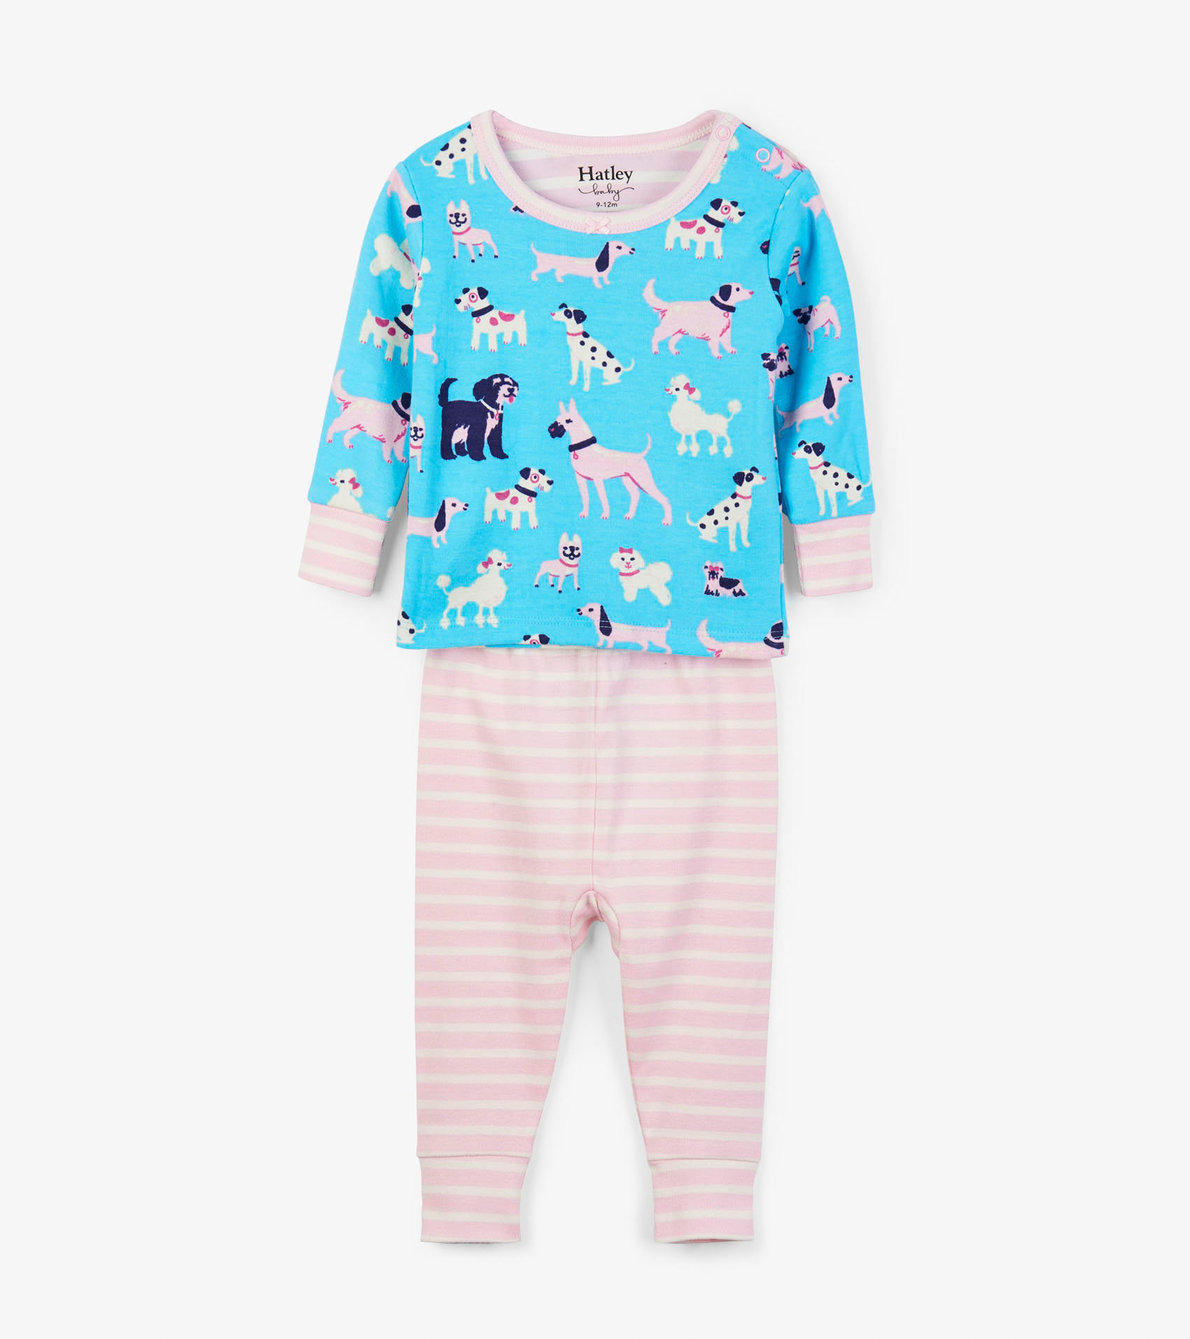 View larger image of Playful Pooches Organic Cotton Baby Pajama Set